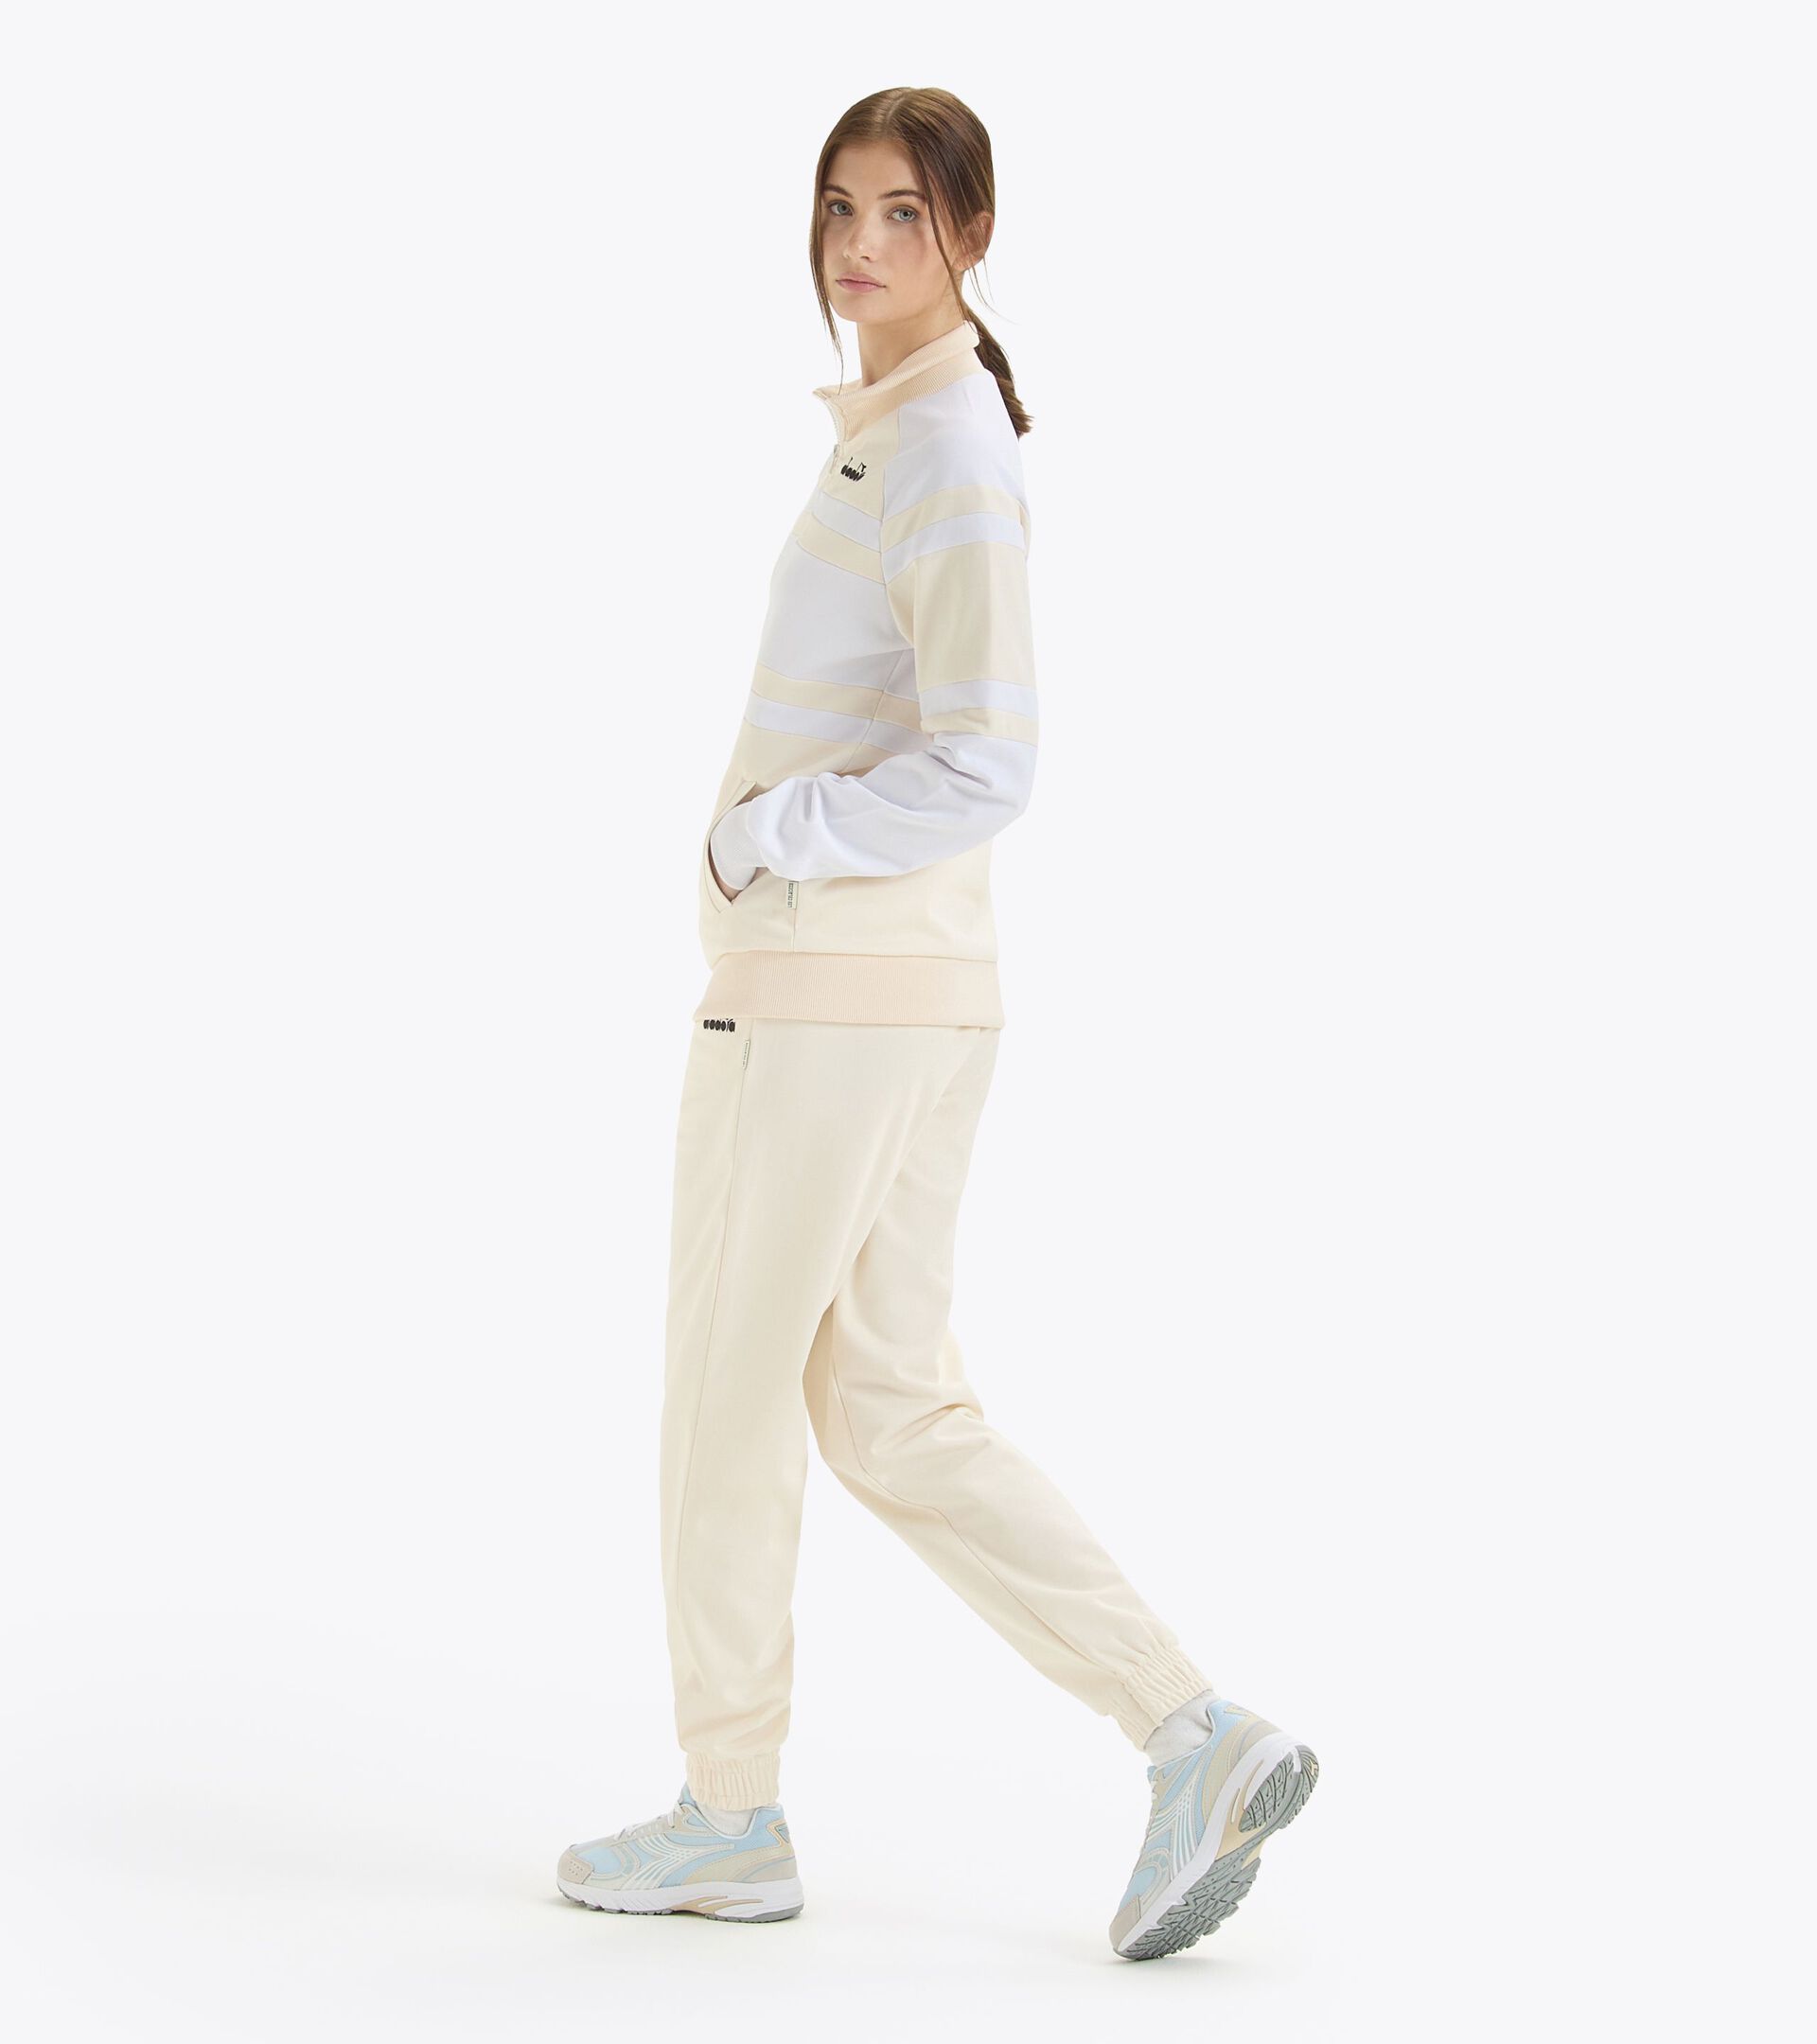 Sports jacket - Gender Neutral
 JACKET 80S WHISPER WHITE - Diadora